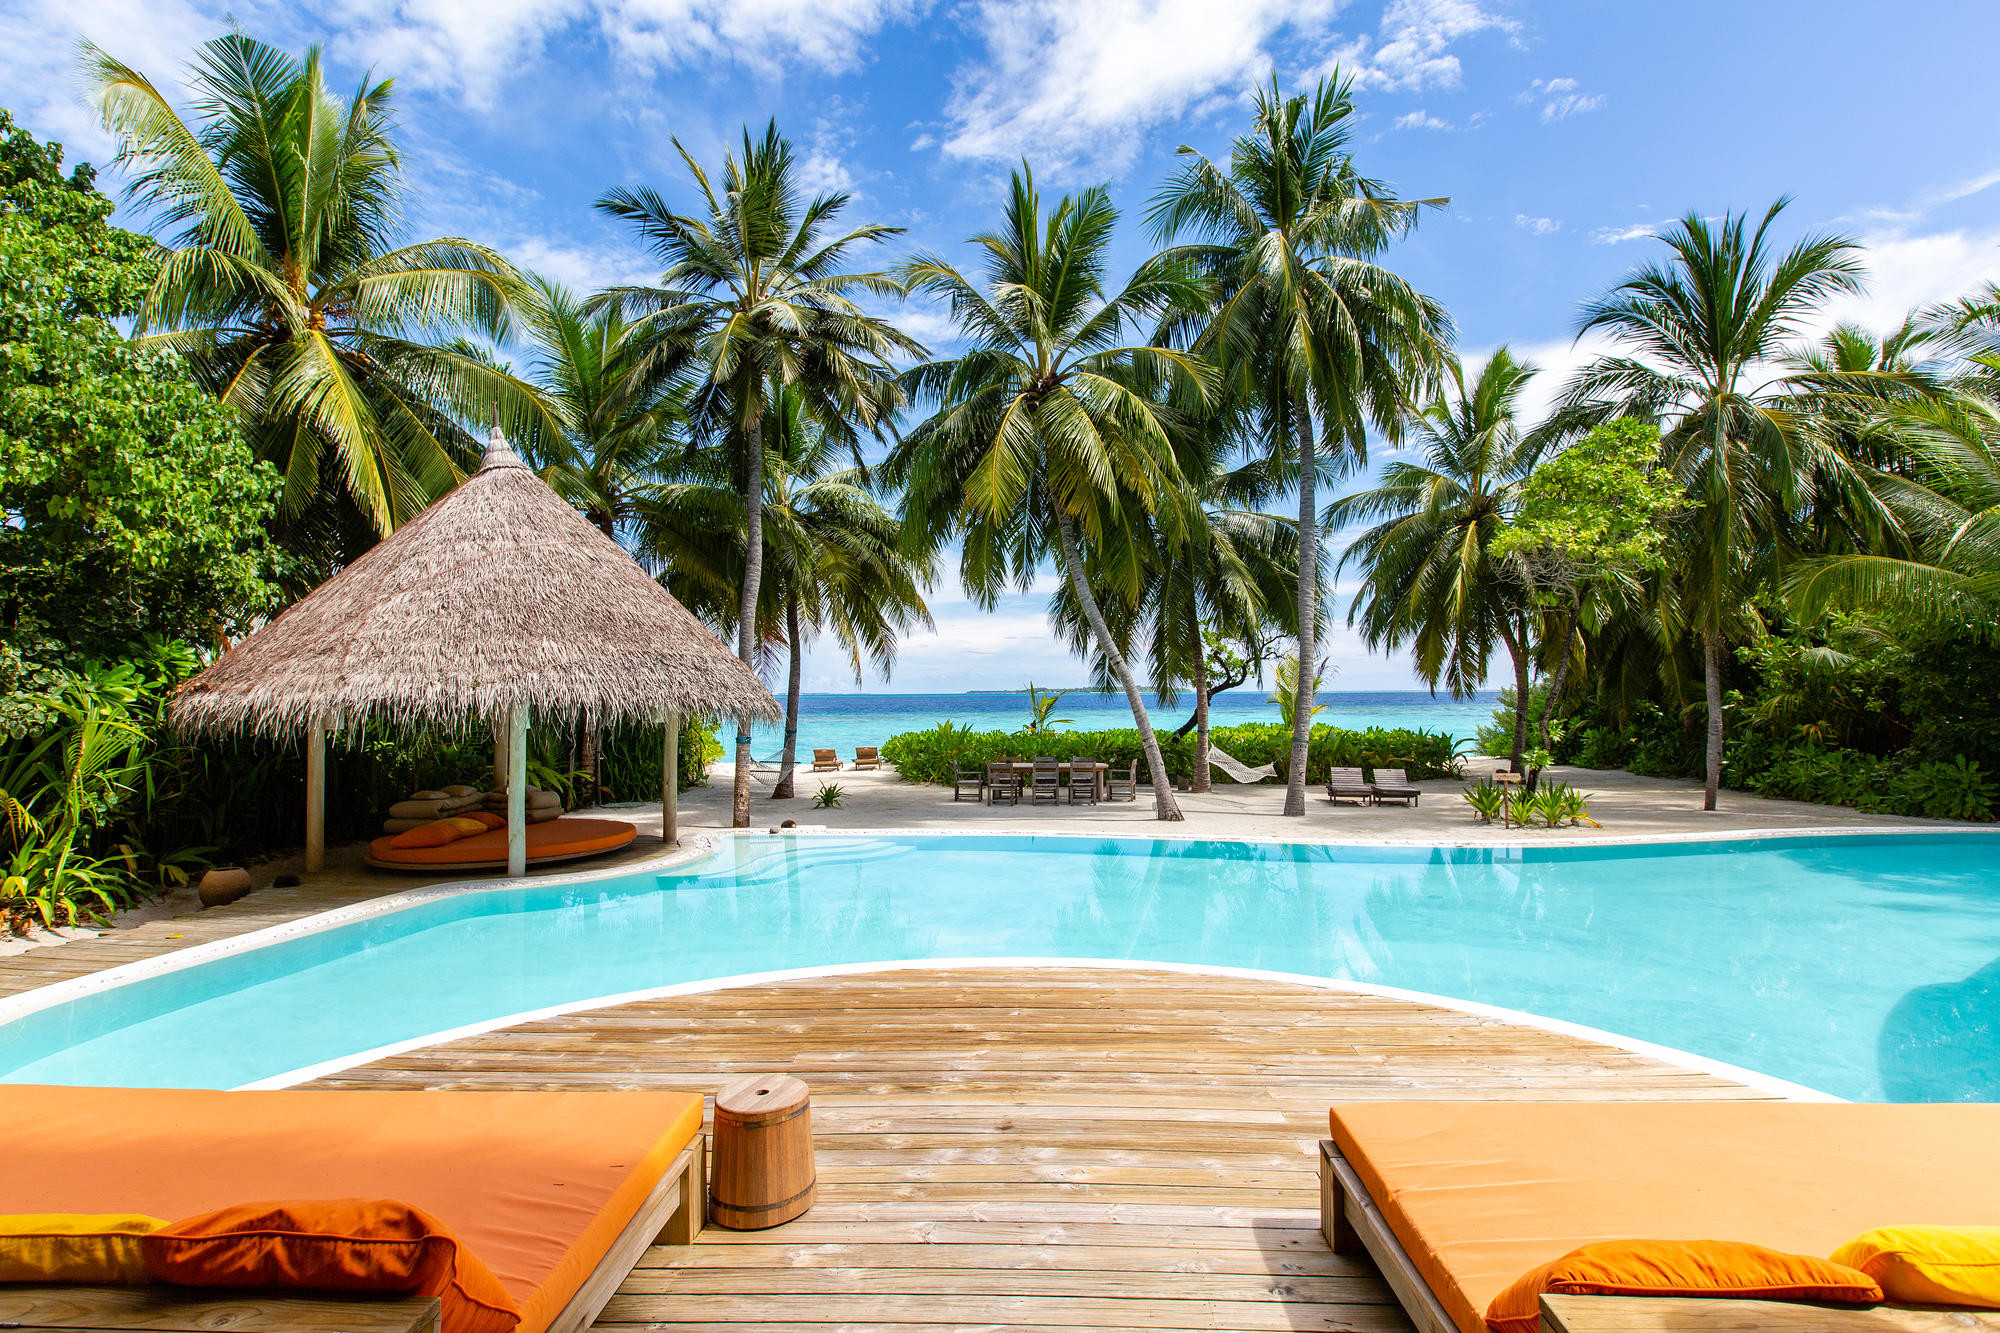 The view from Villa 15 at Soneva Fushi in The Maldives